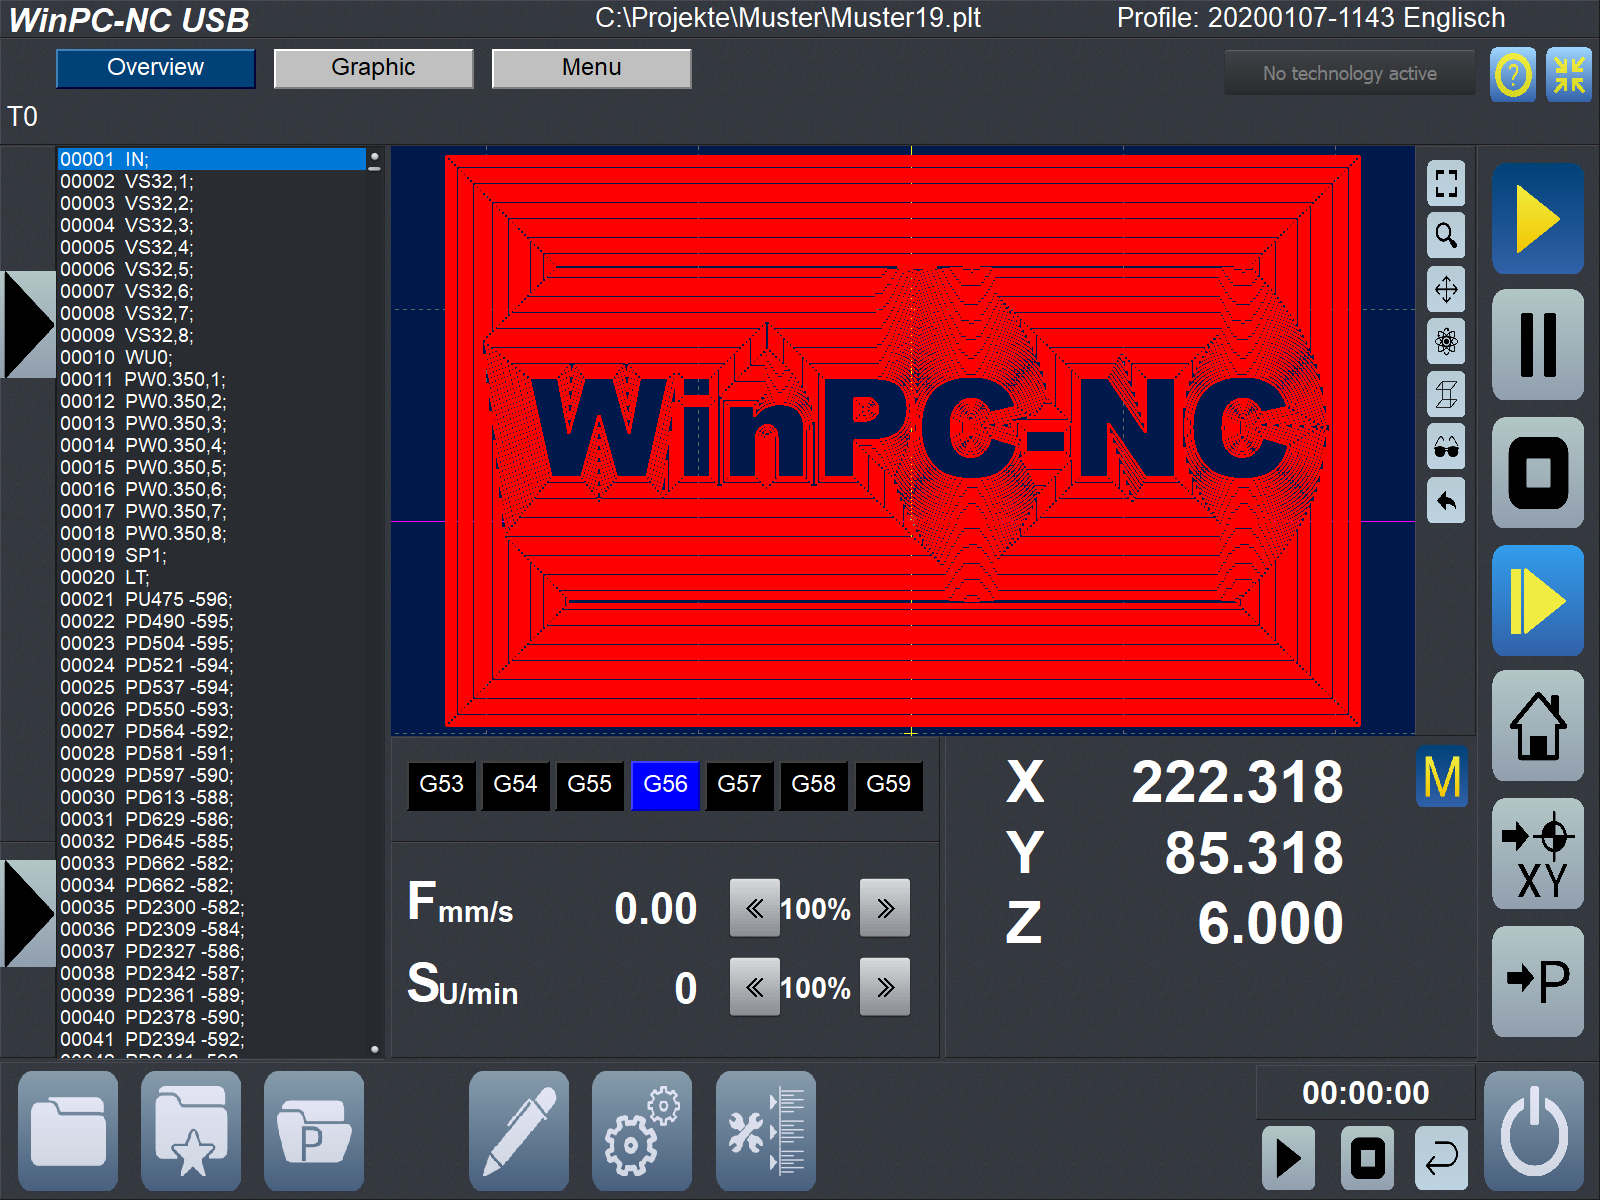 From WinPC-NC Starter to WinPC-NC USB